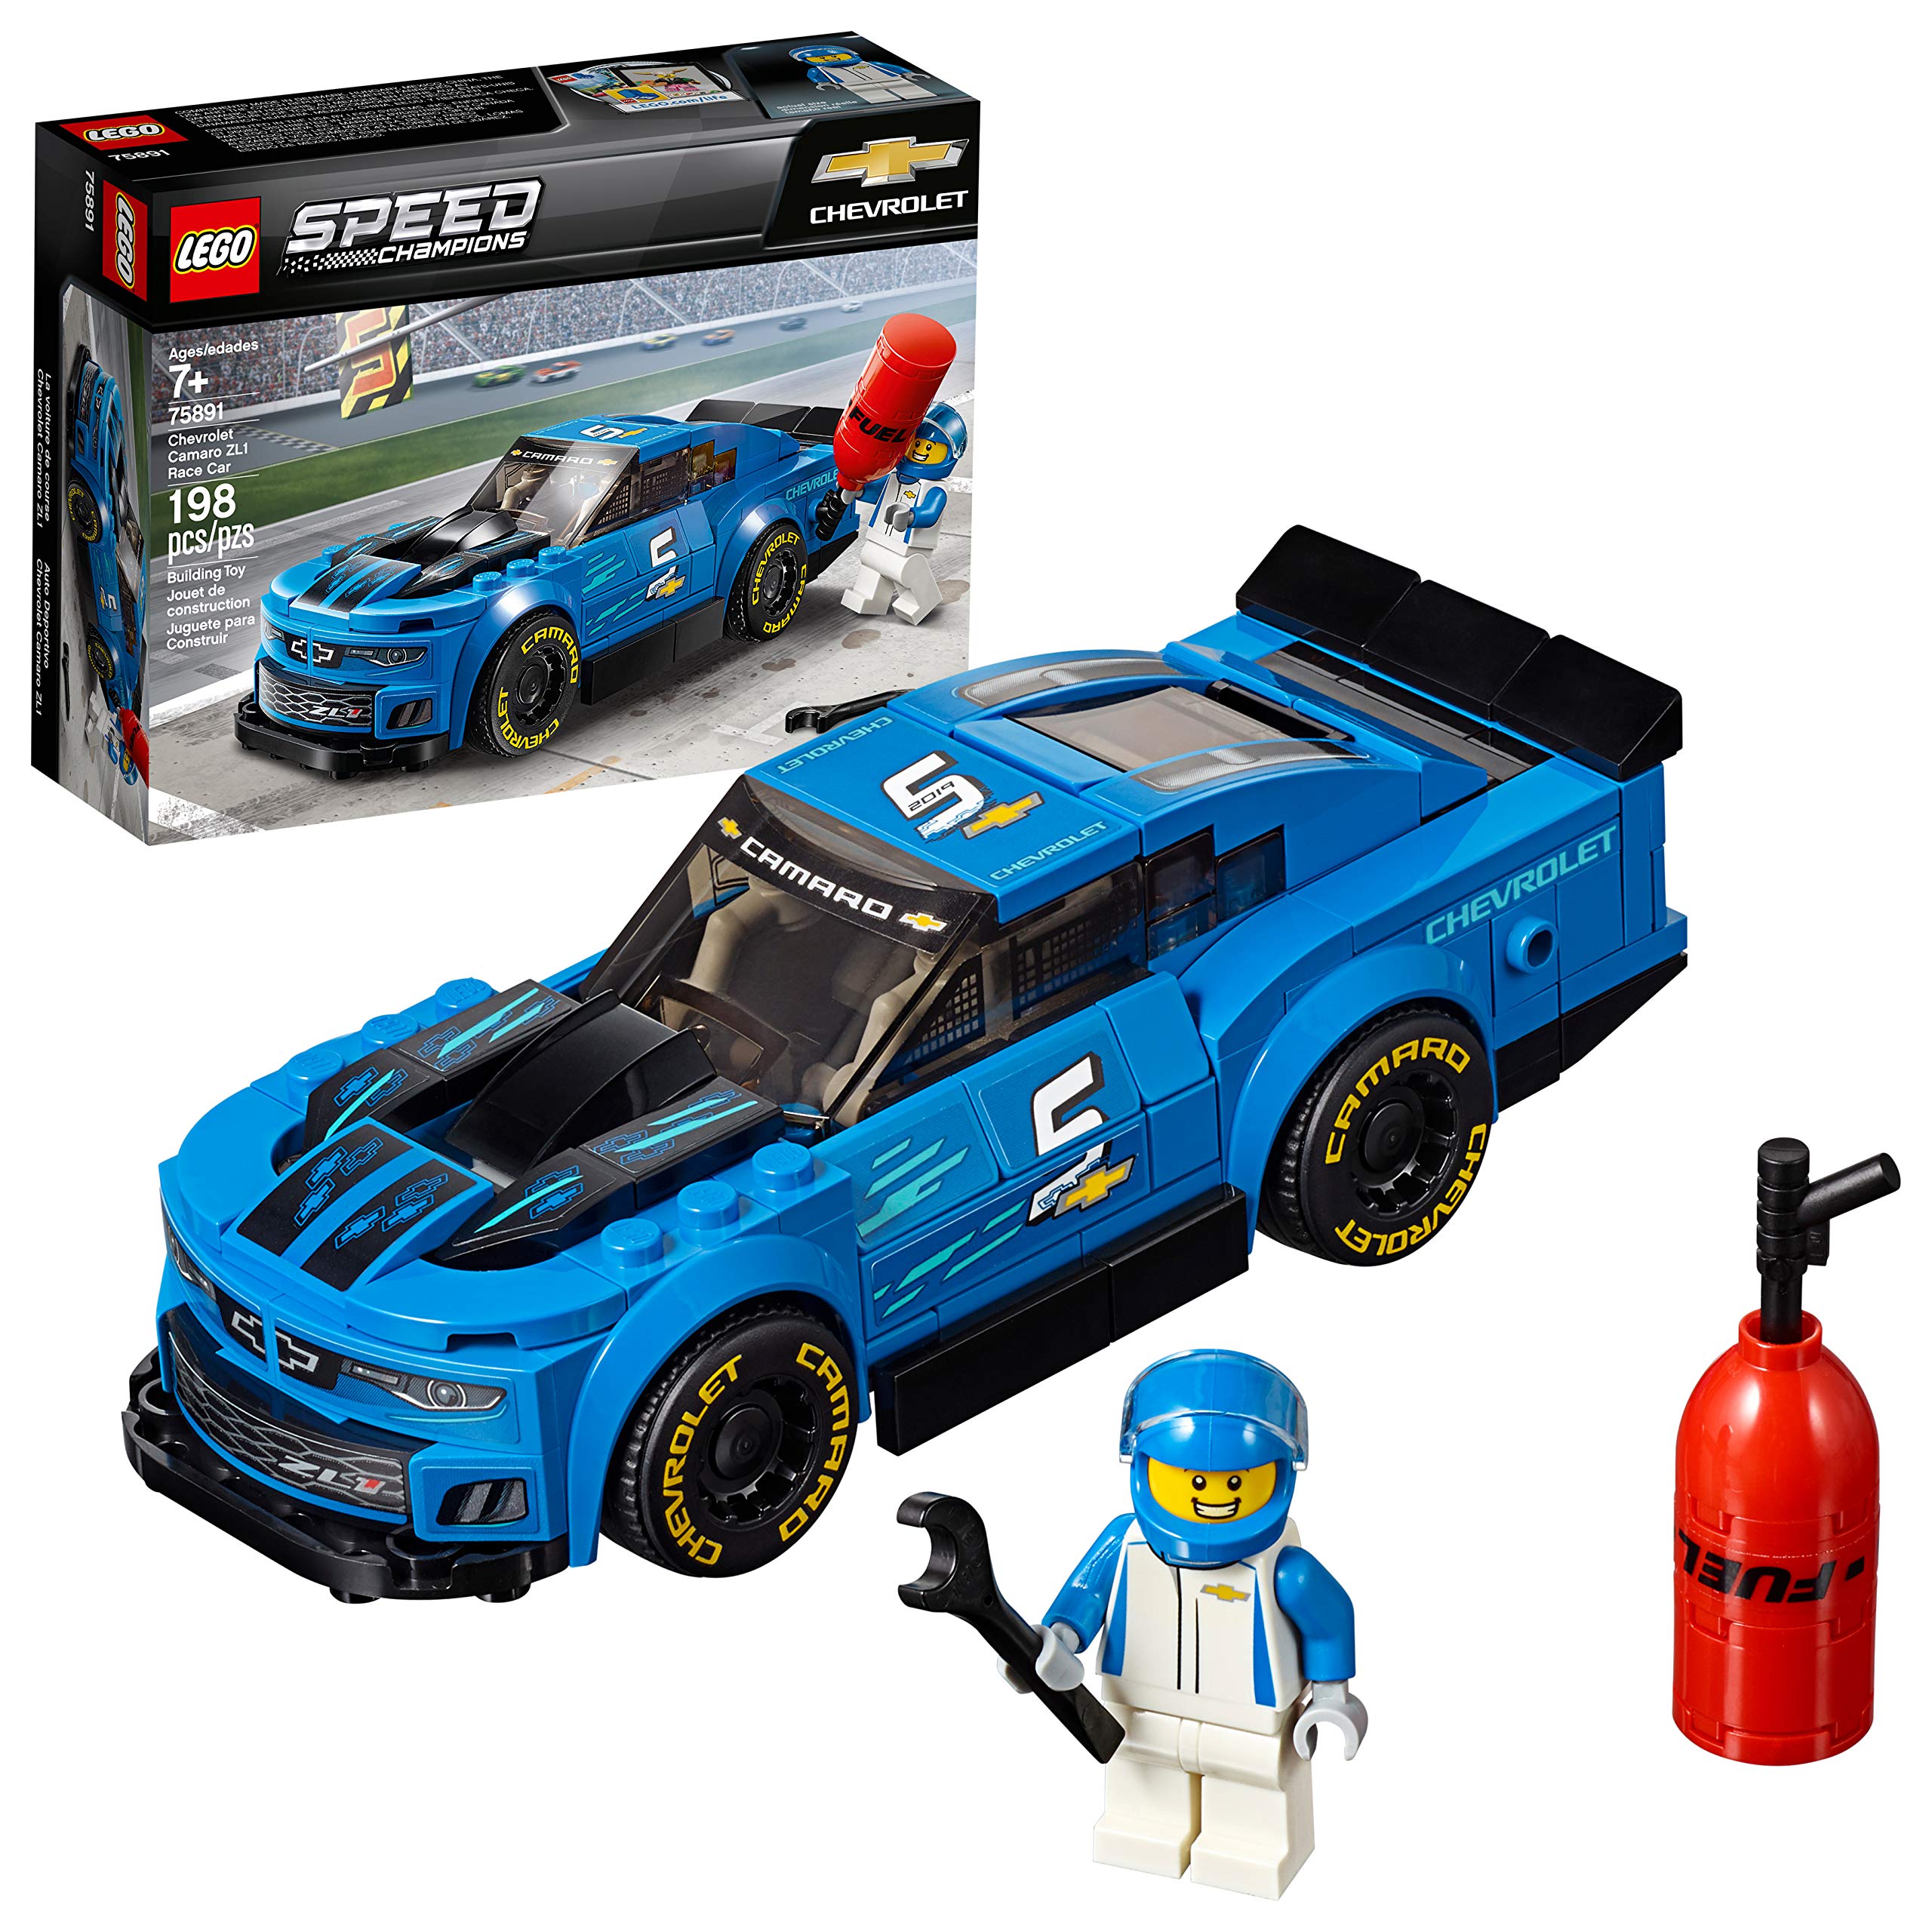 LEGO Speed Champions Chevrolet Camaro ZL1 Race Car 75891 Building Kit (Like New, Open Box)